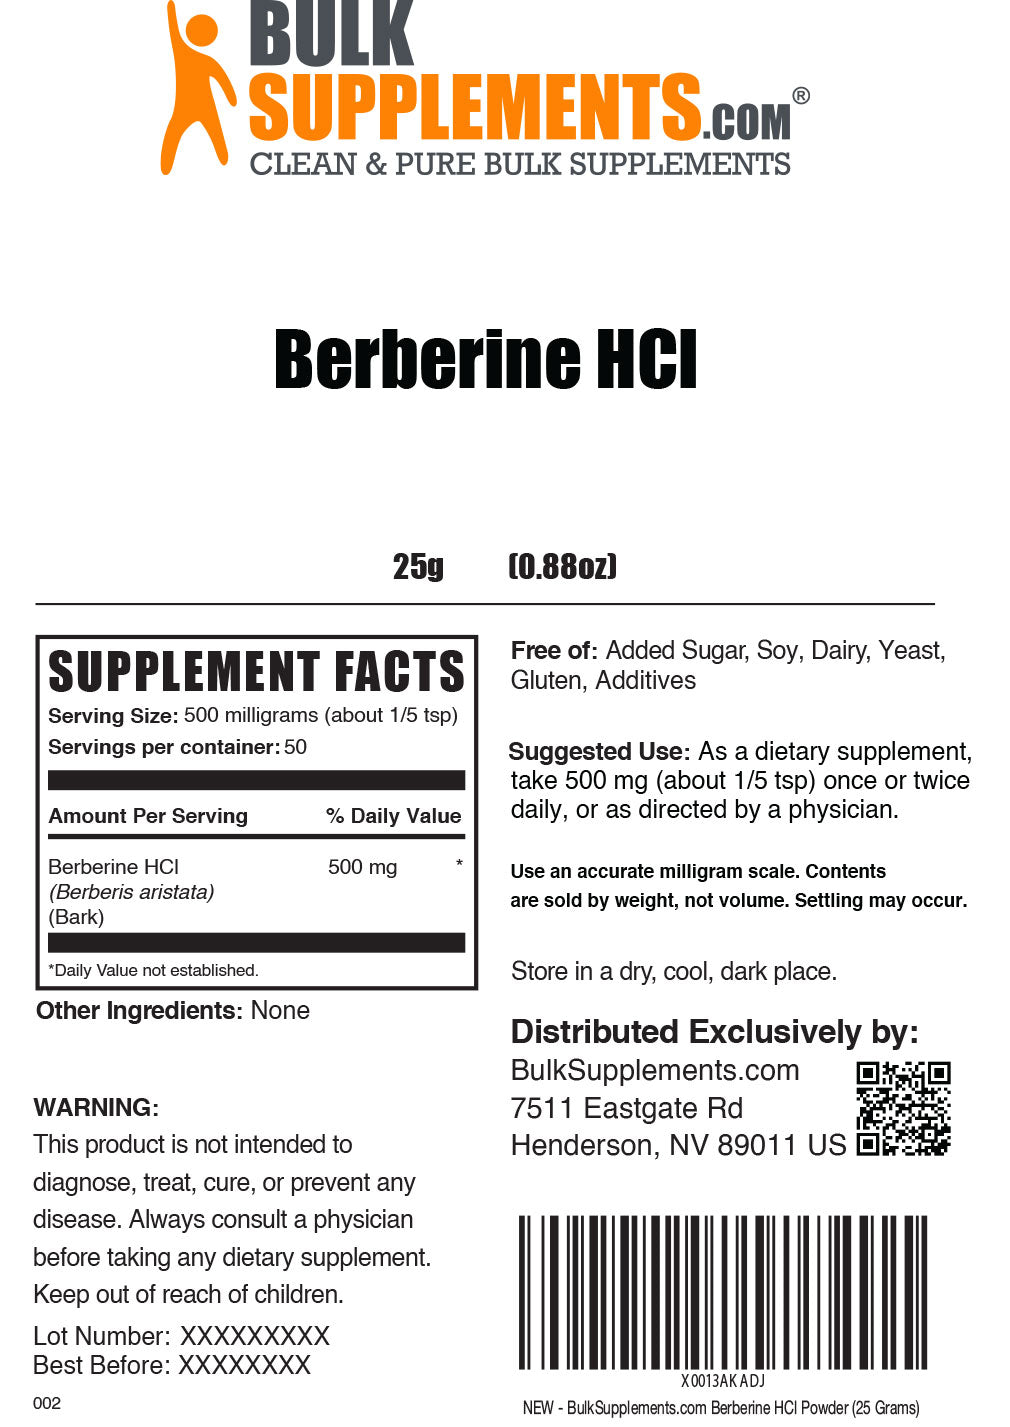 Berberine HCl Supplement Facts 25g bag